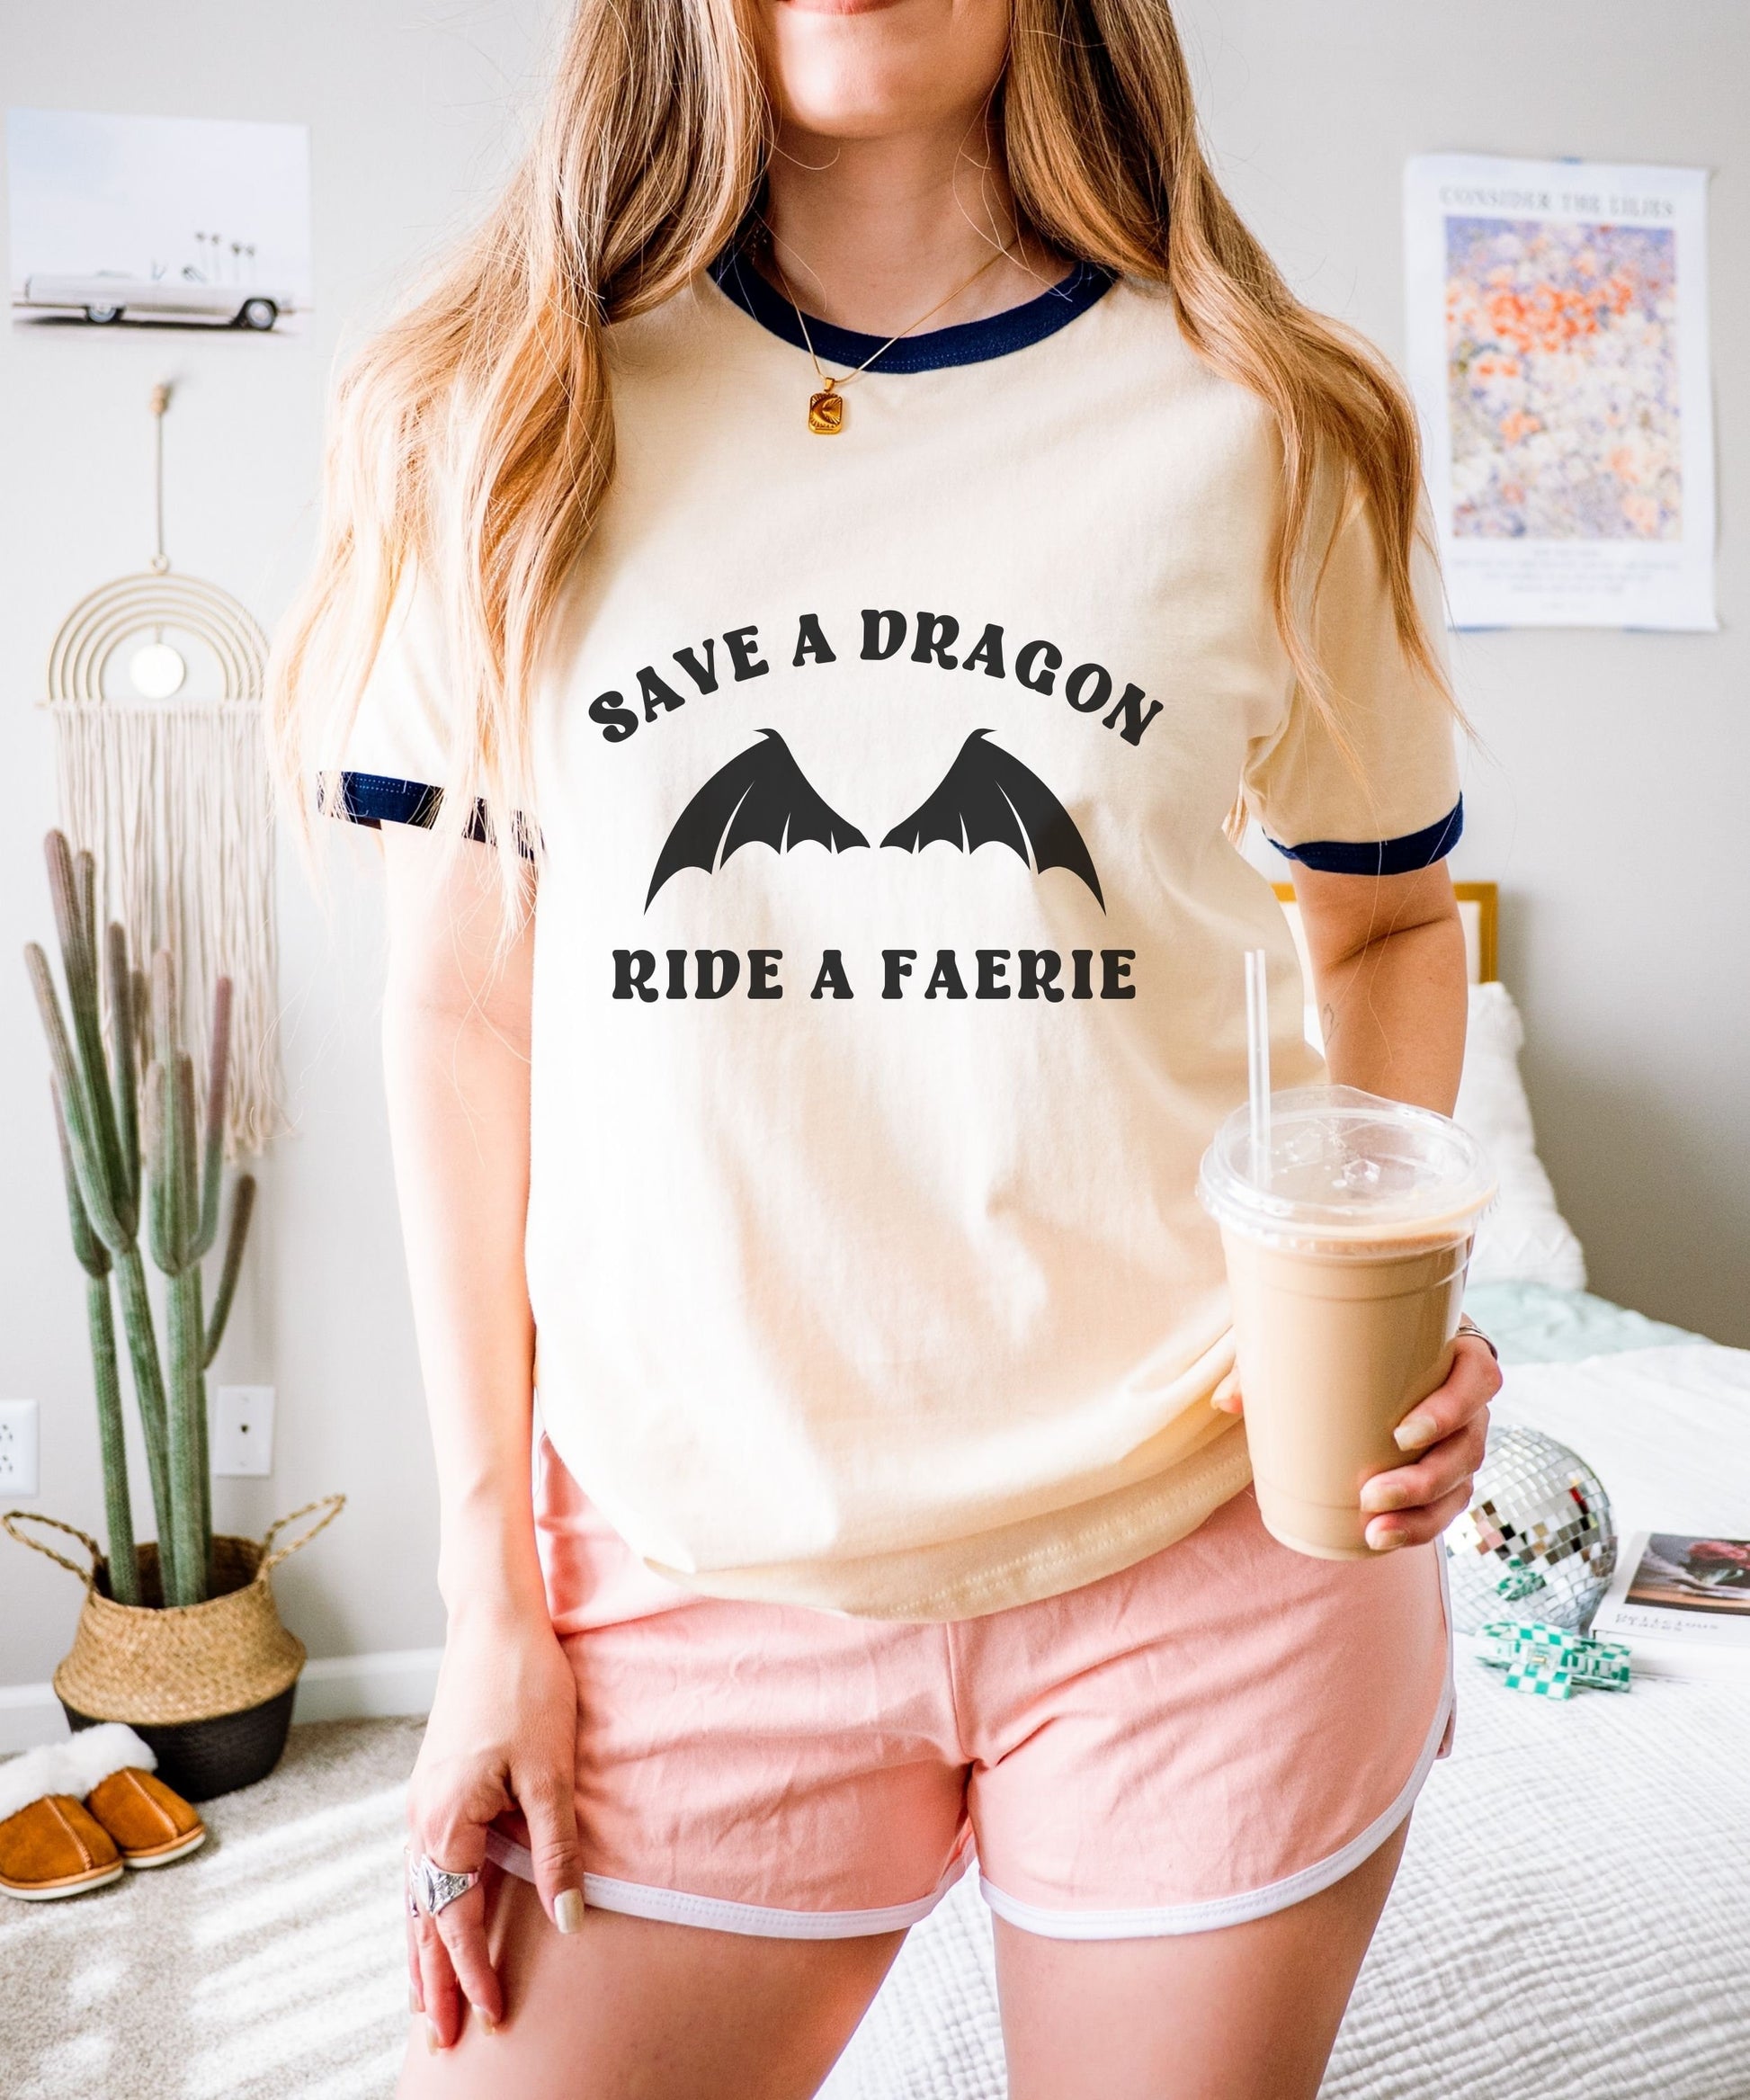 Save a Dragon Ride a Faerie Smut Shirt Ringer Tee, Bookish Things, Booktok Merch Spicy Books Shirt Romantasy Fantasy Reader Morally Grey Tee